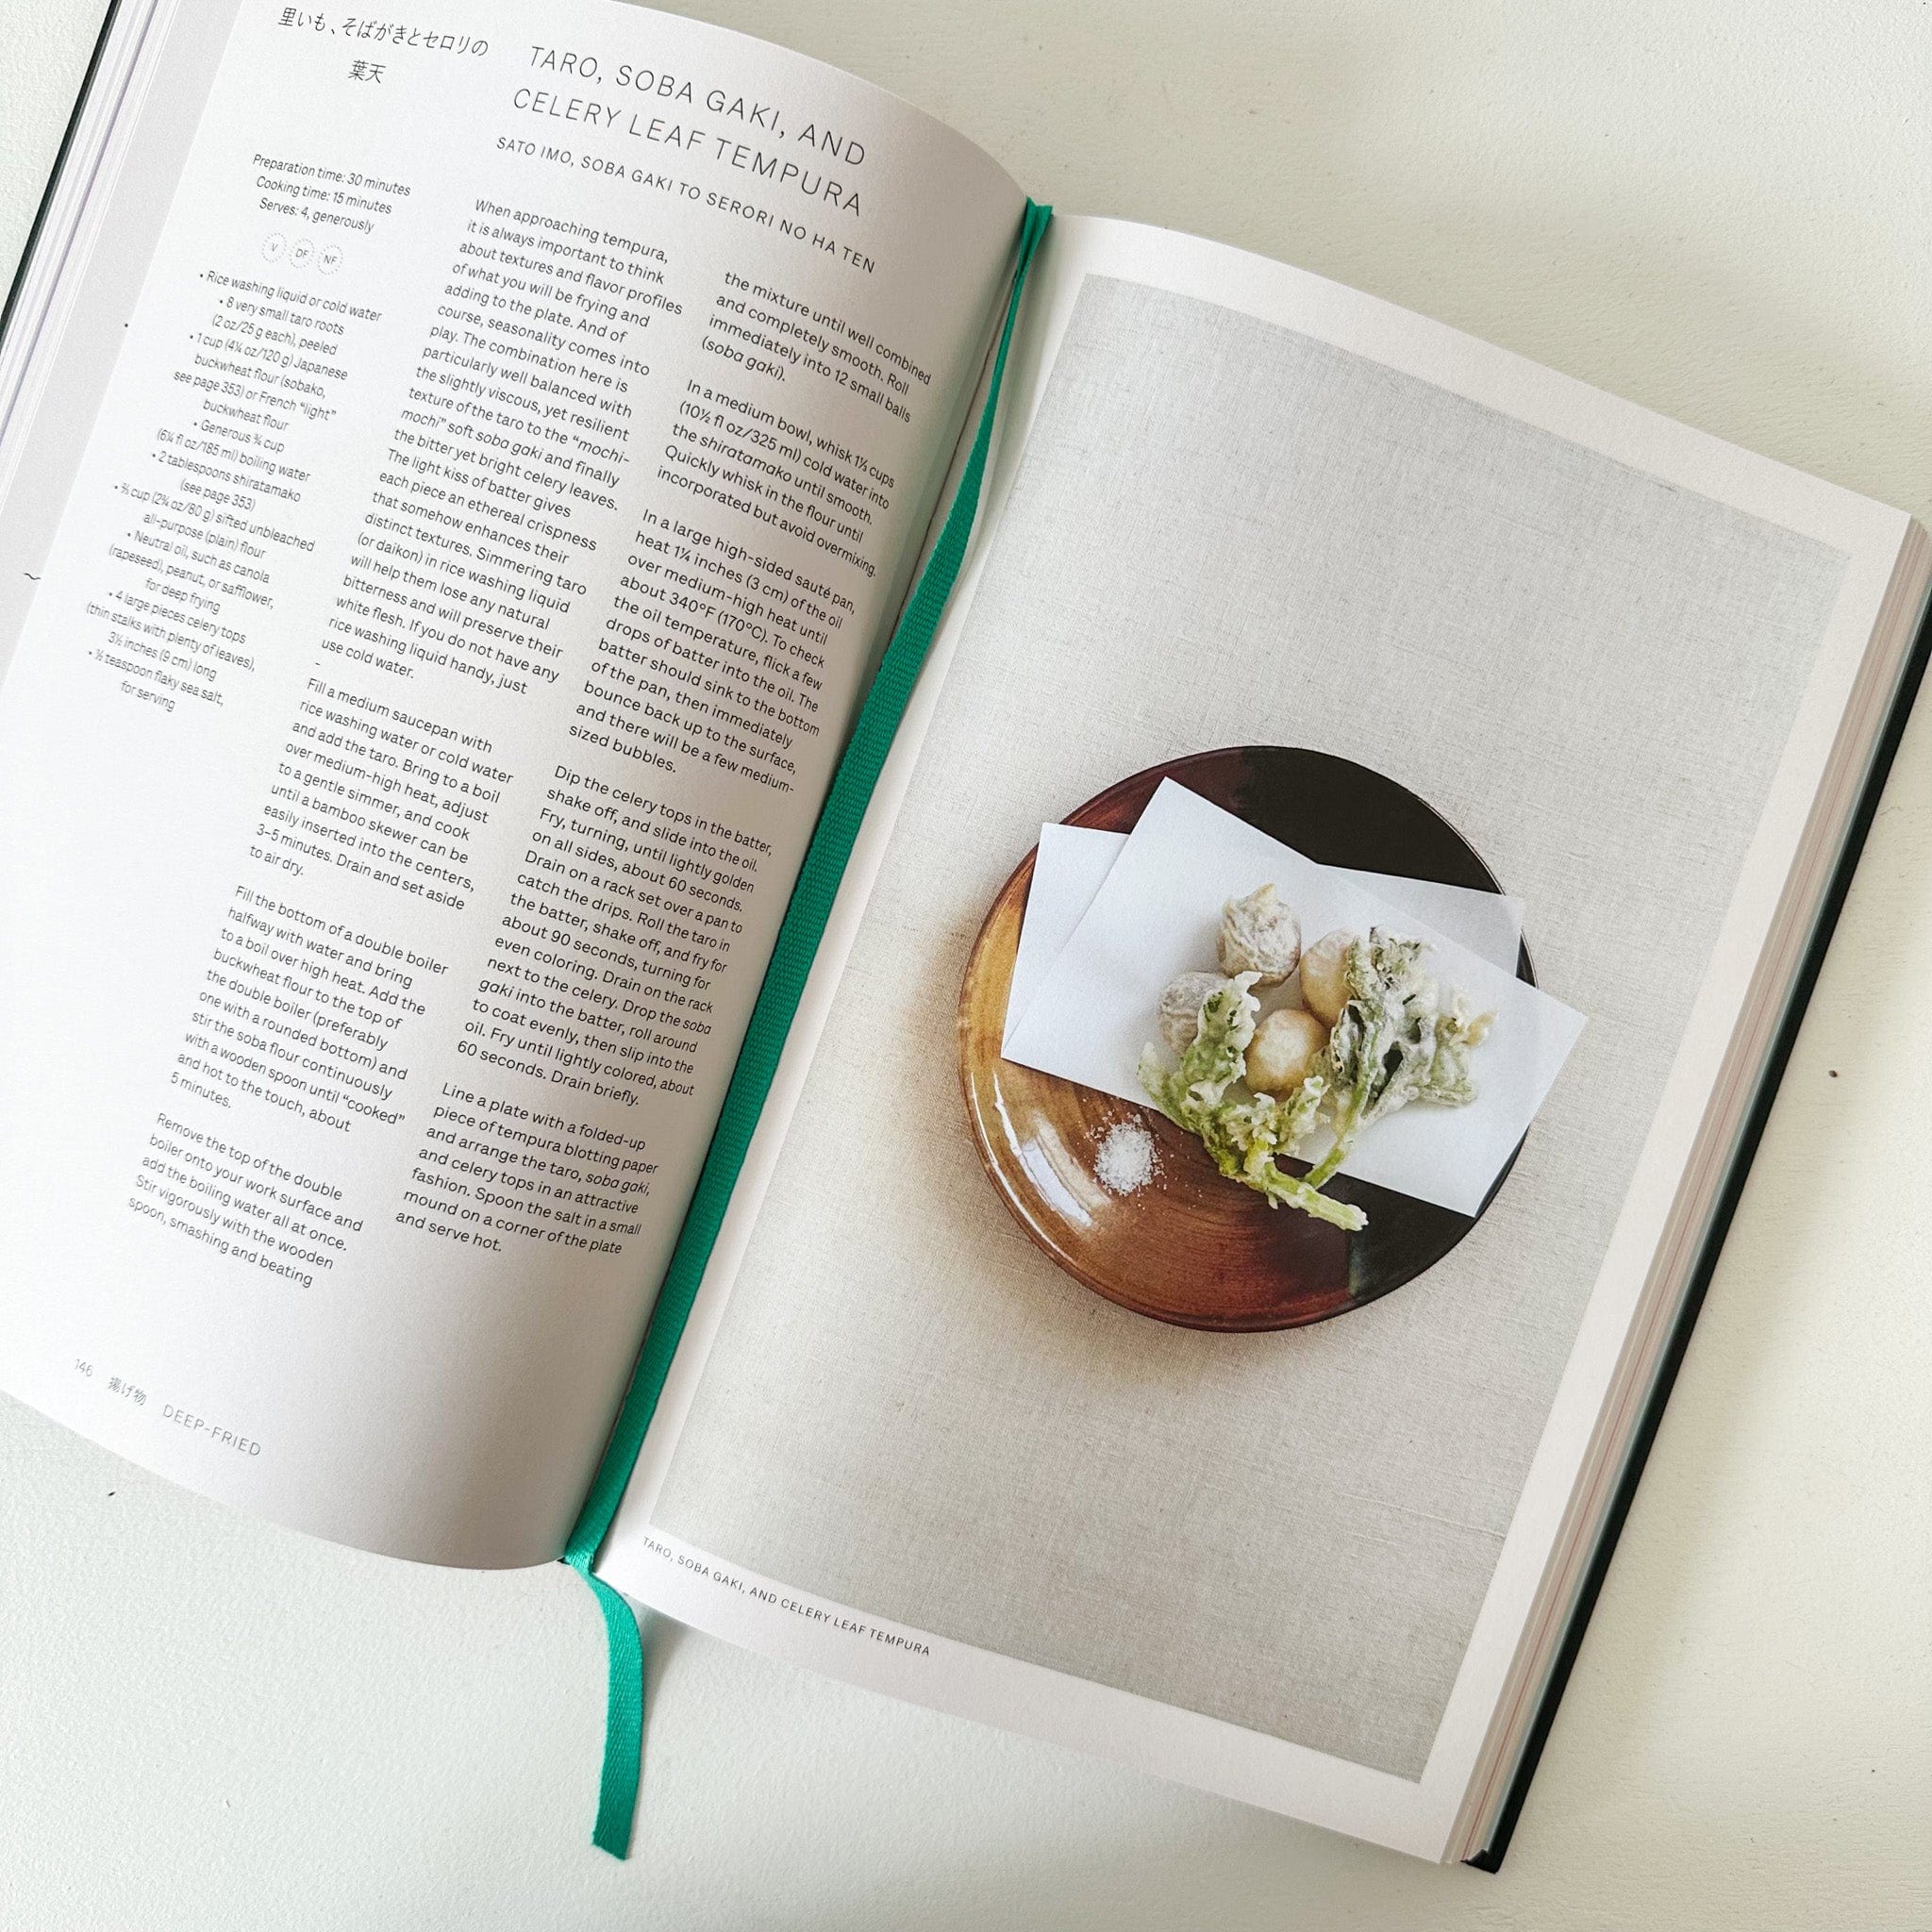 phaidon Books Japan: The Vegetarian Cookbook